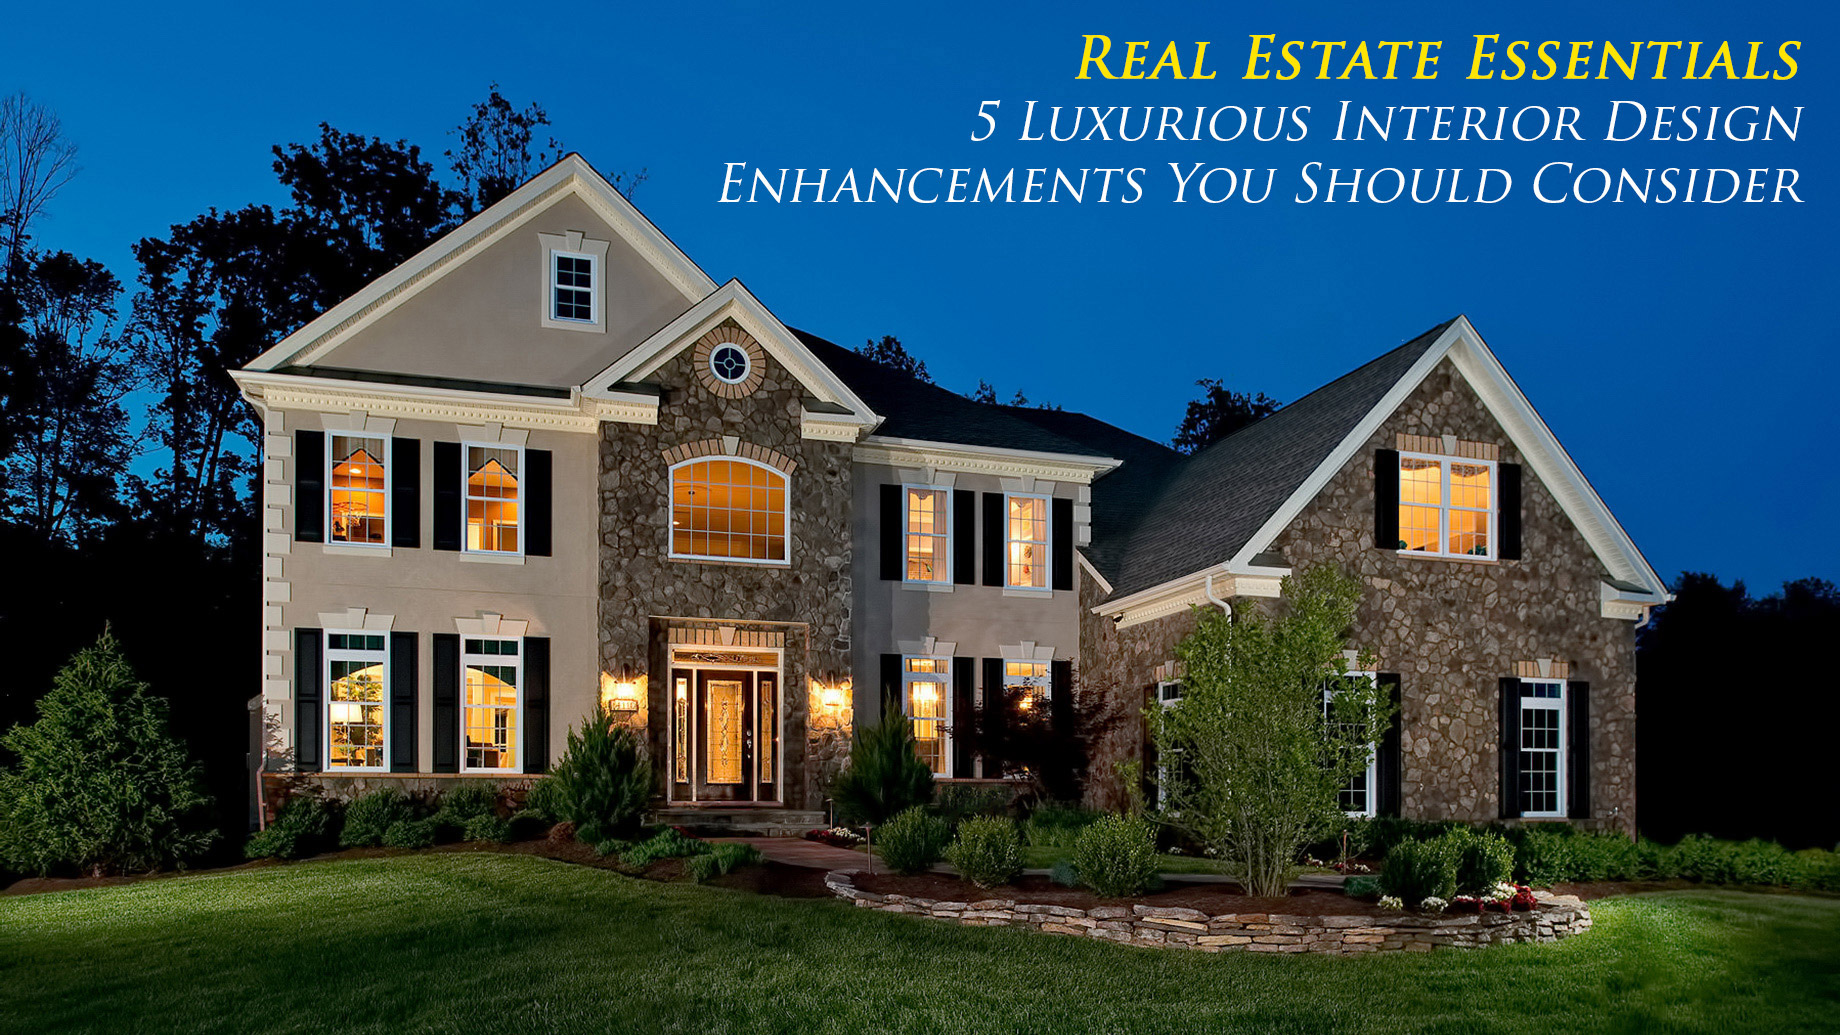 Real Estate Essentials - 5 Luxurious Interior Design Enhancements You Should Consider